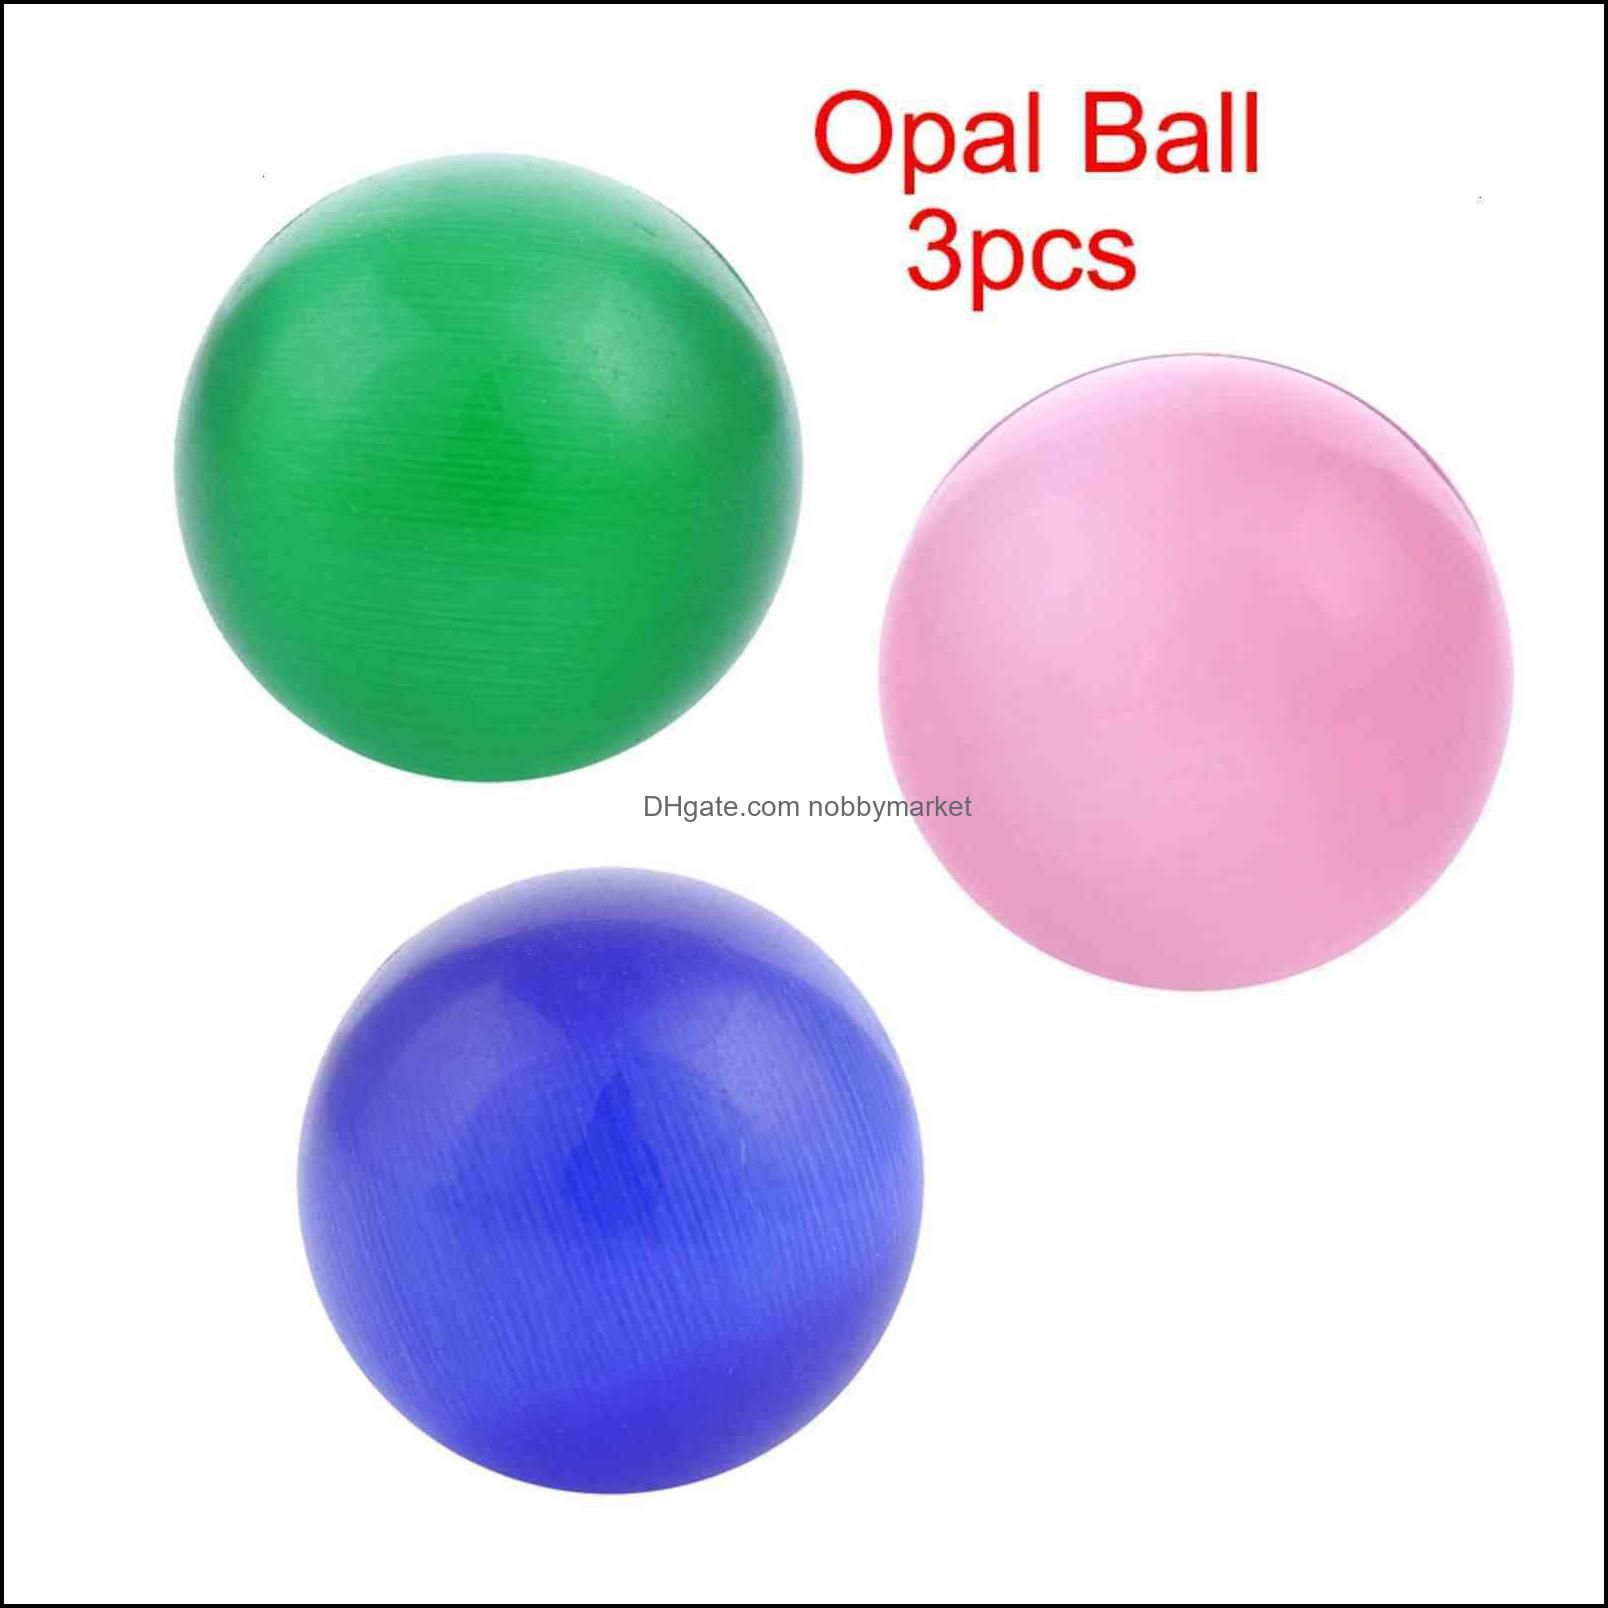 Opal Ball 3pcs